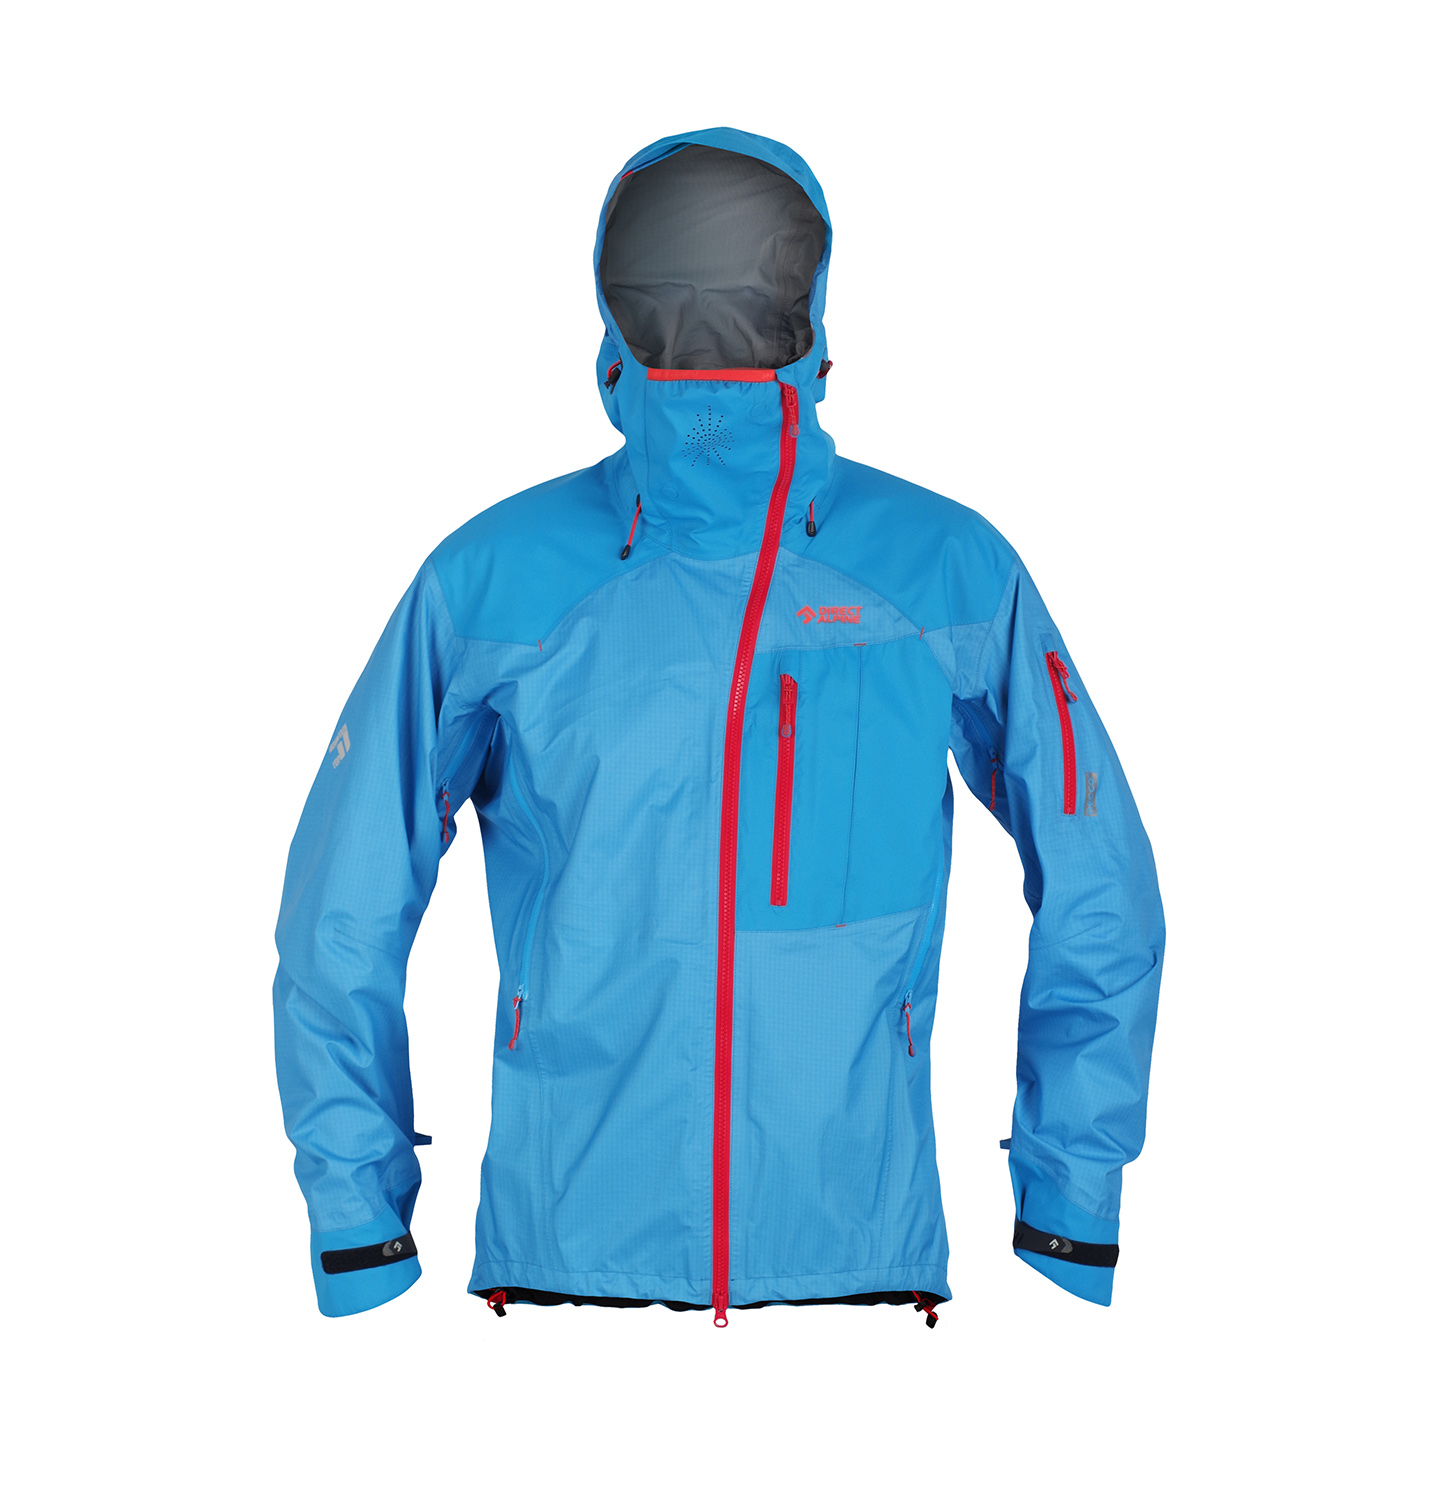 Jacket GUIDE, Made in EU - Direct Alpine